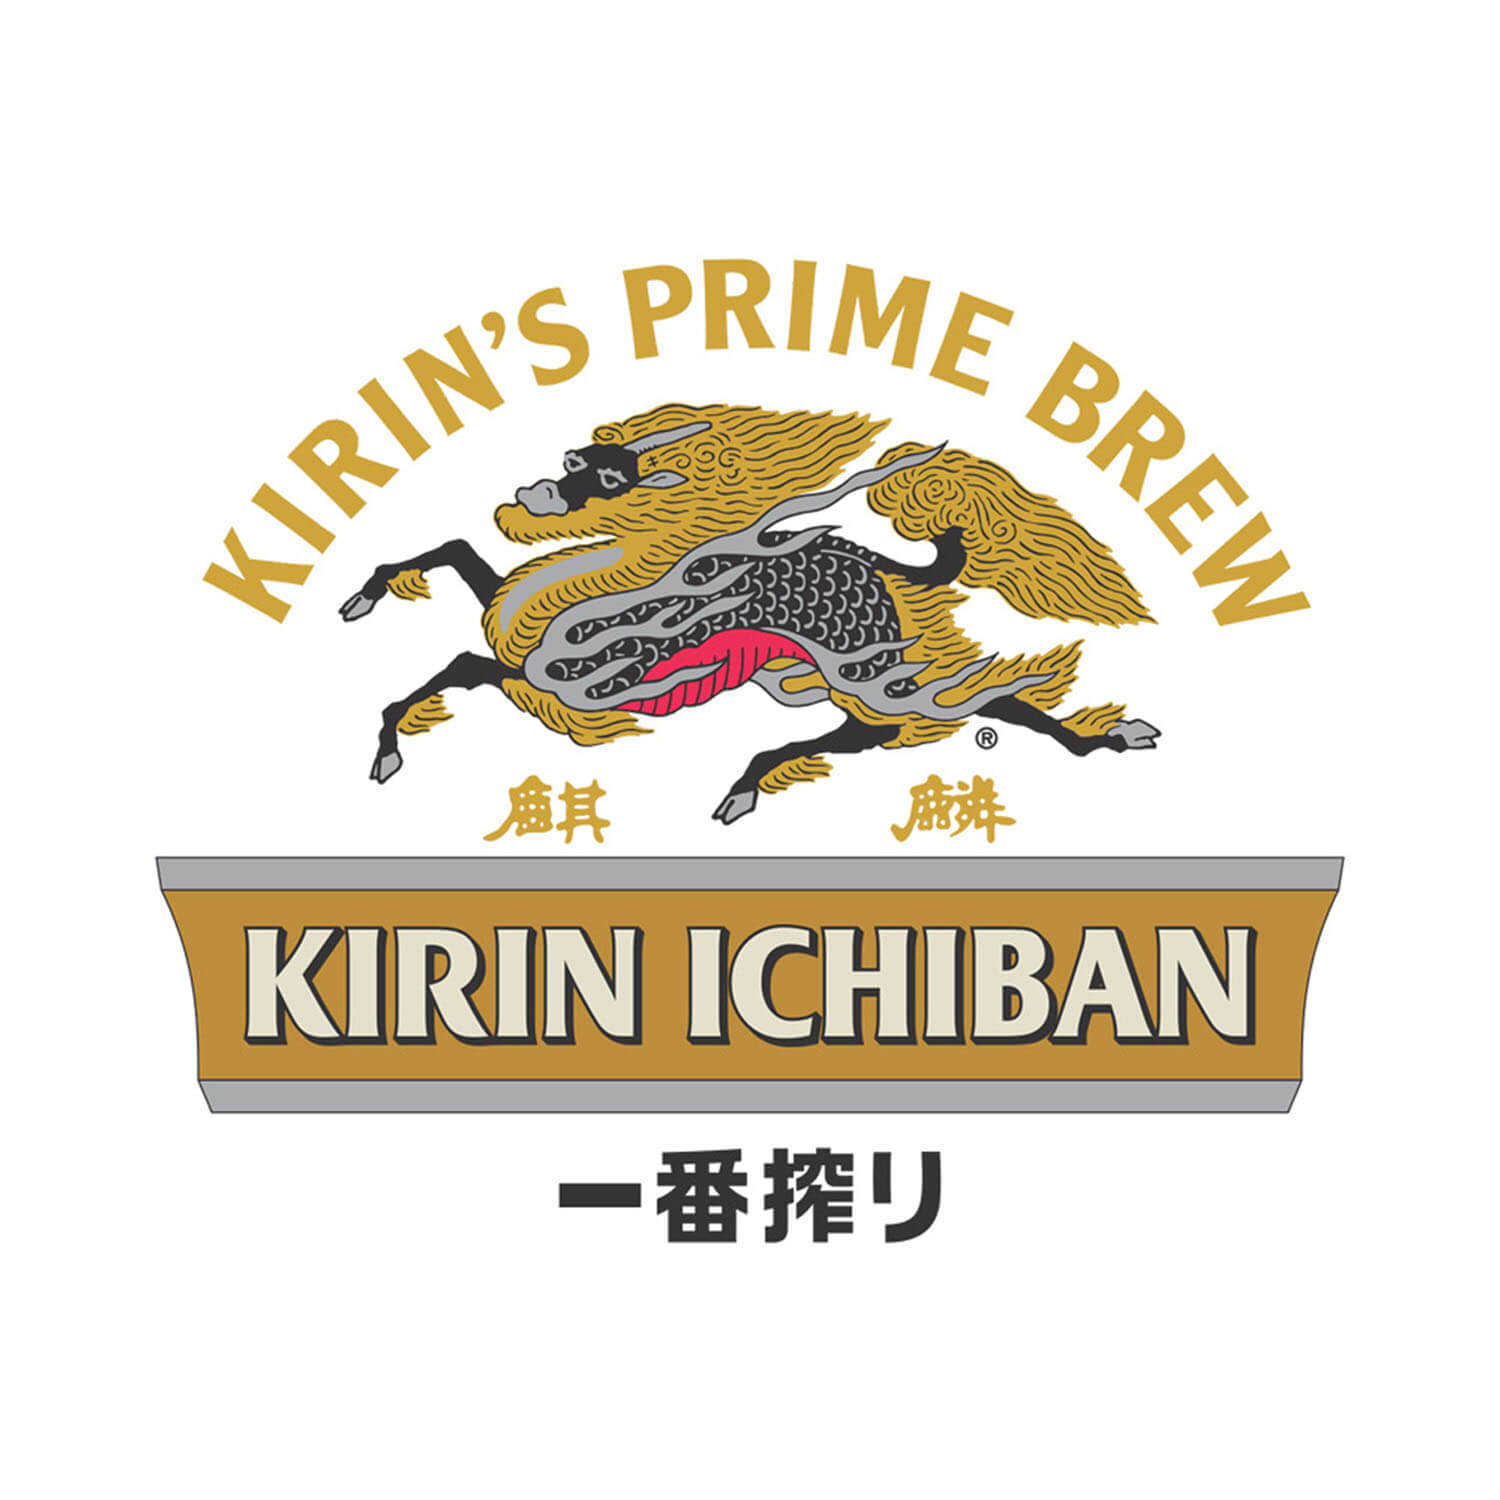 Kirin Ichiban 5.0%